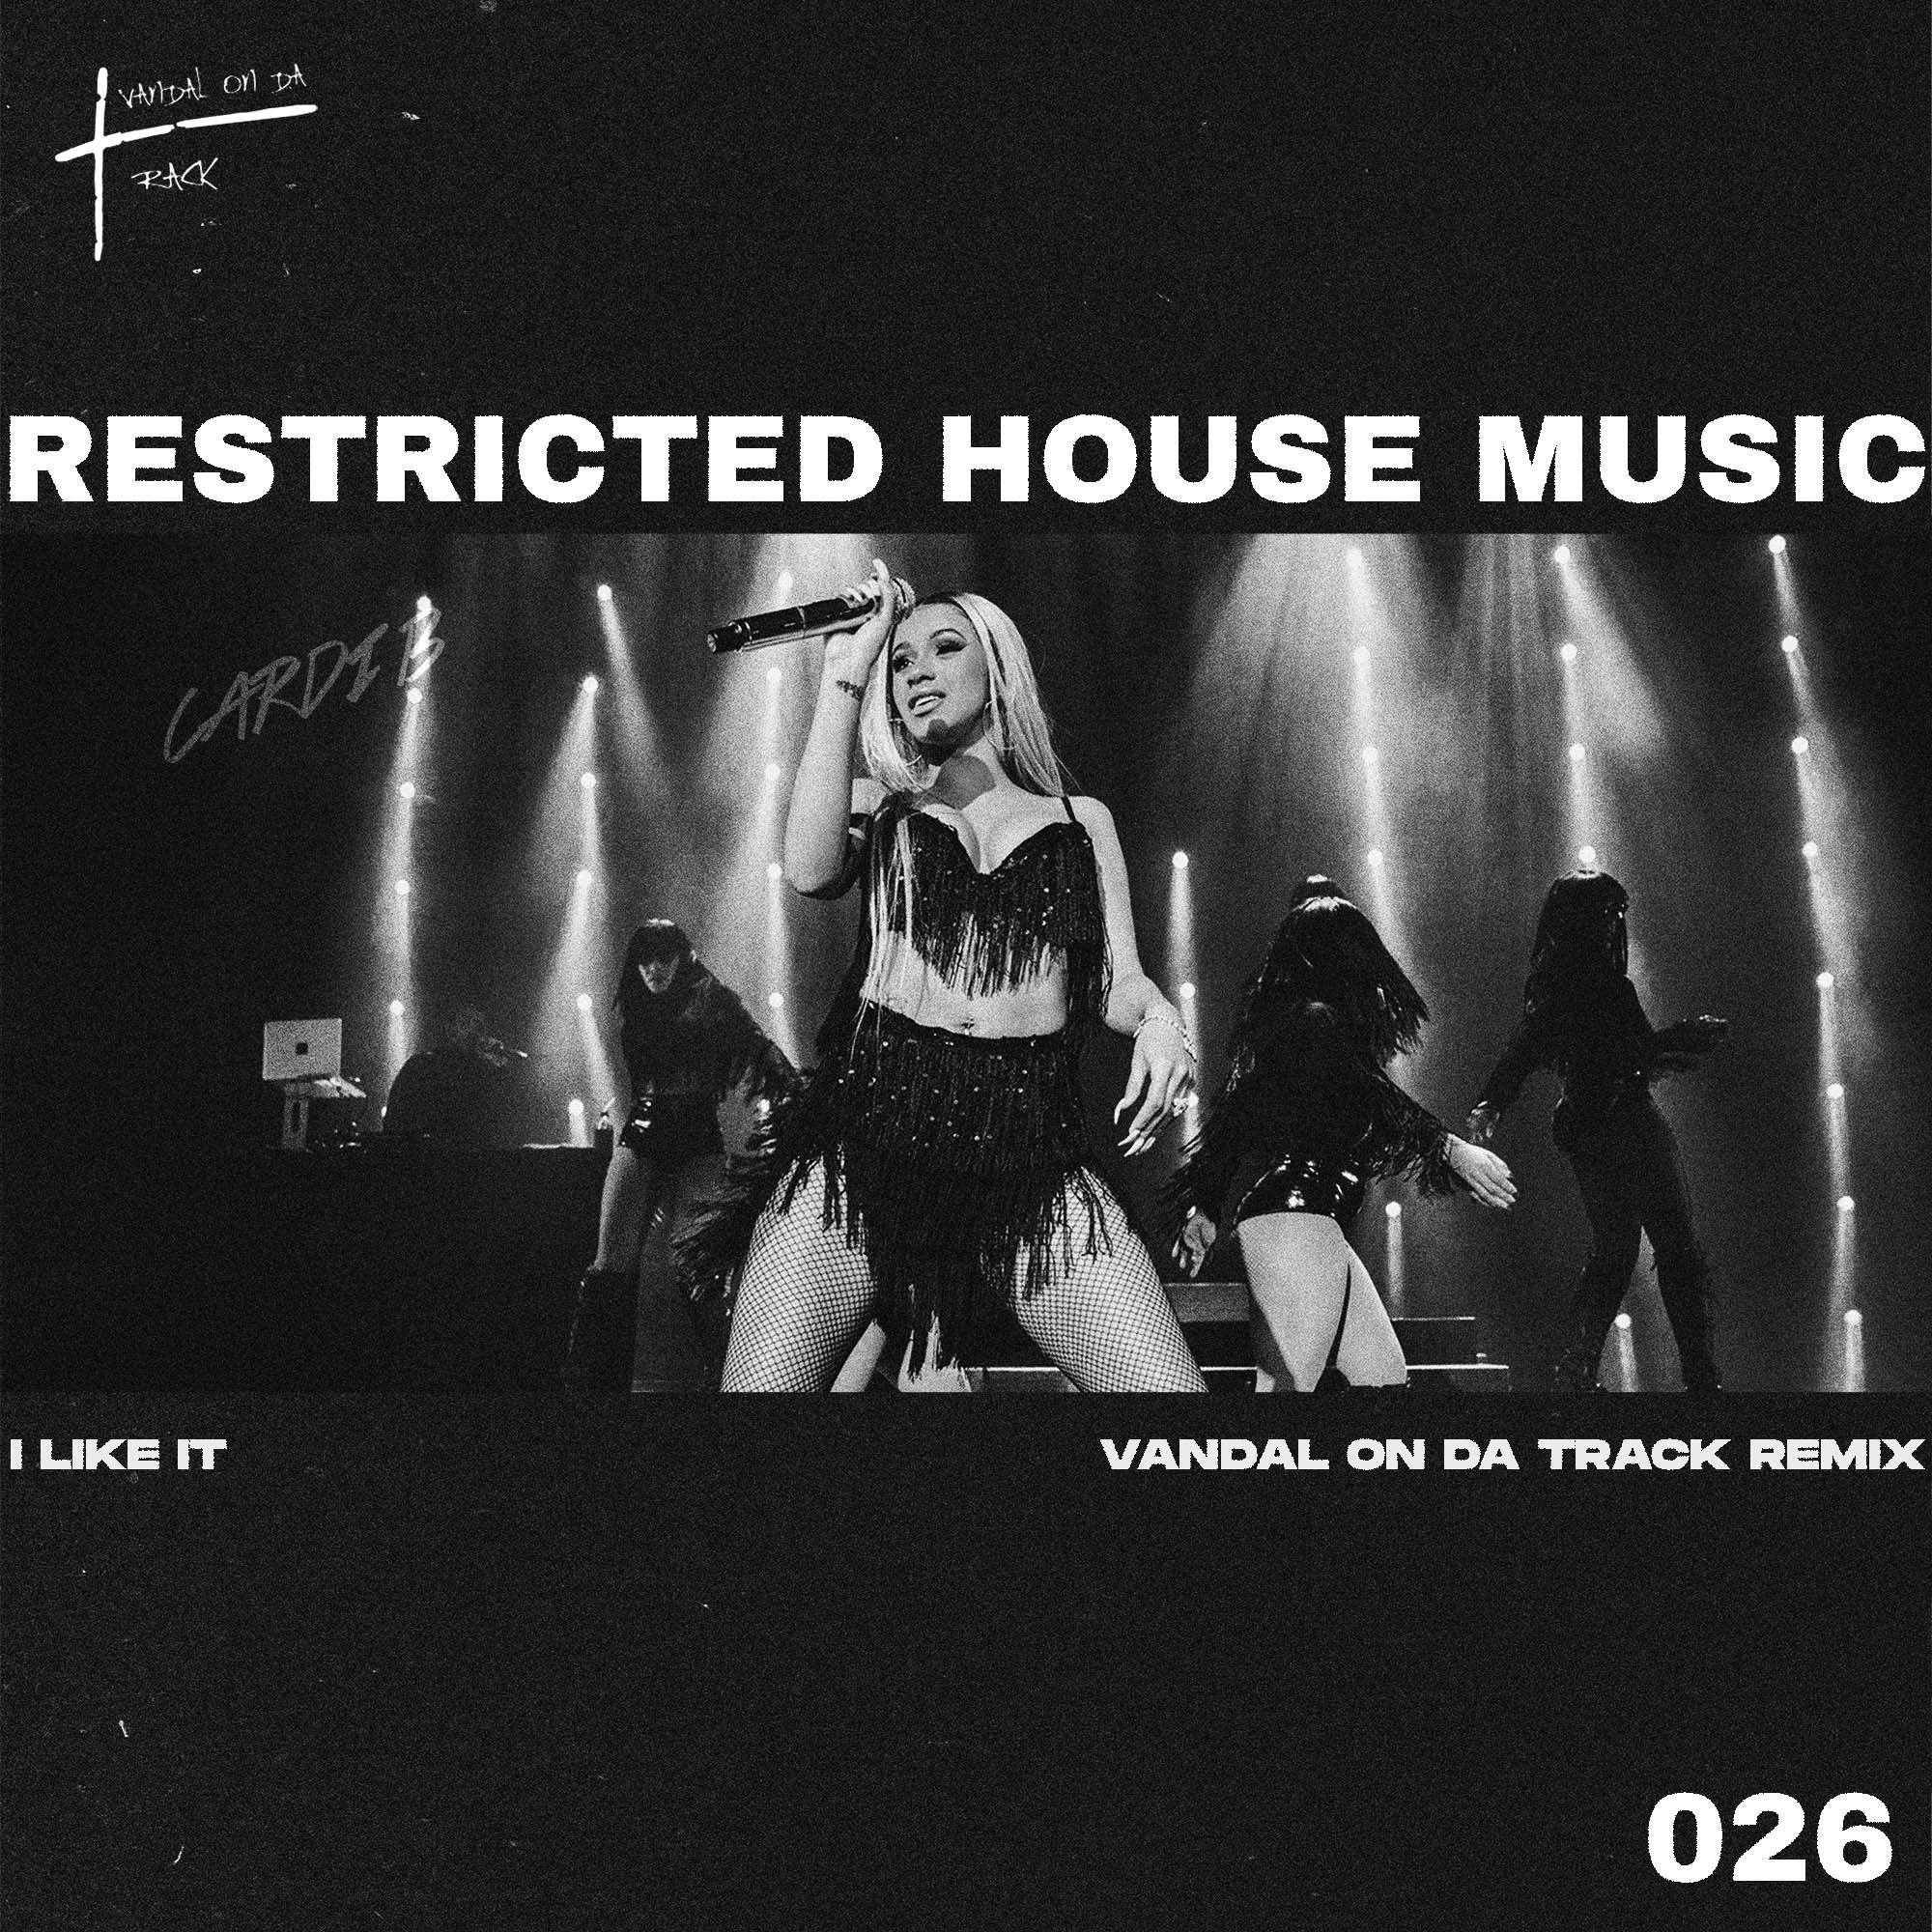 Sii mai Cardi B - I Like It (Vandal On Da Track & Ravage Remix) (Restricted House Music 026) FREE DL